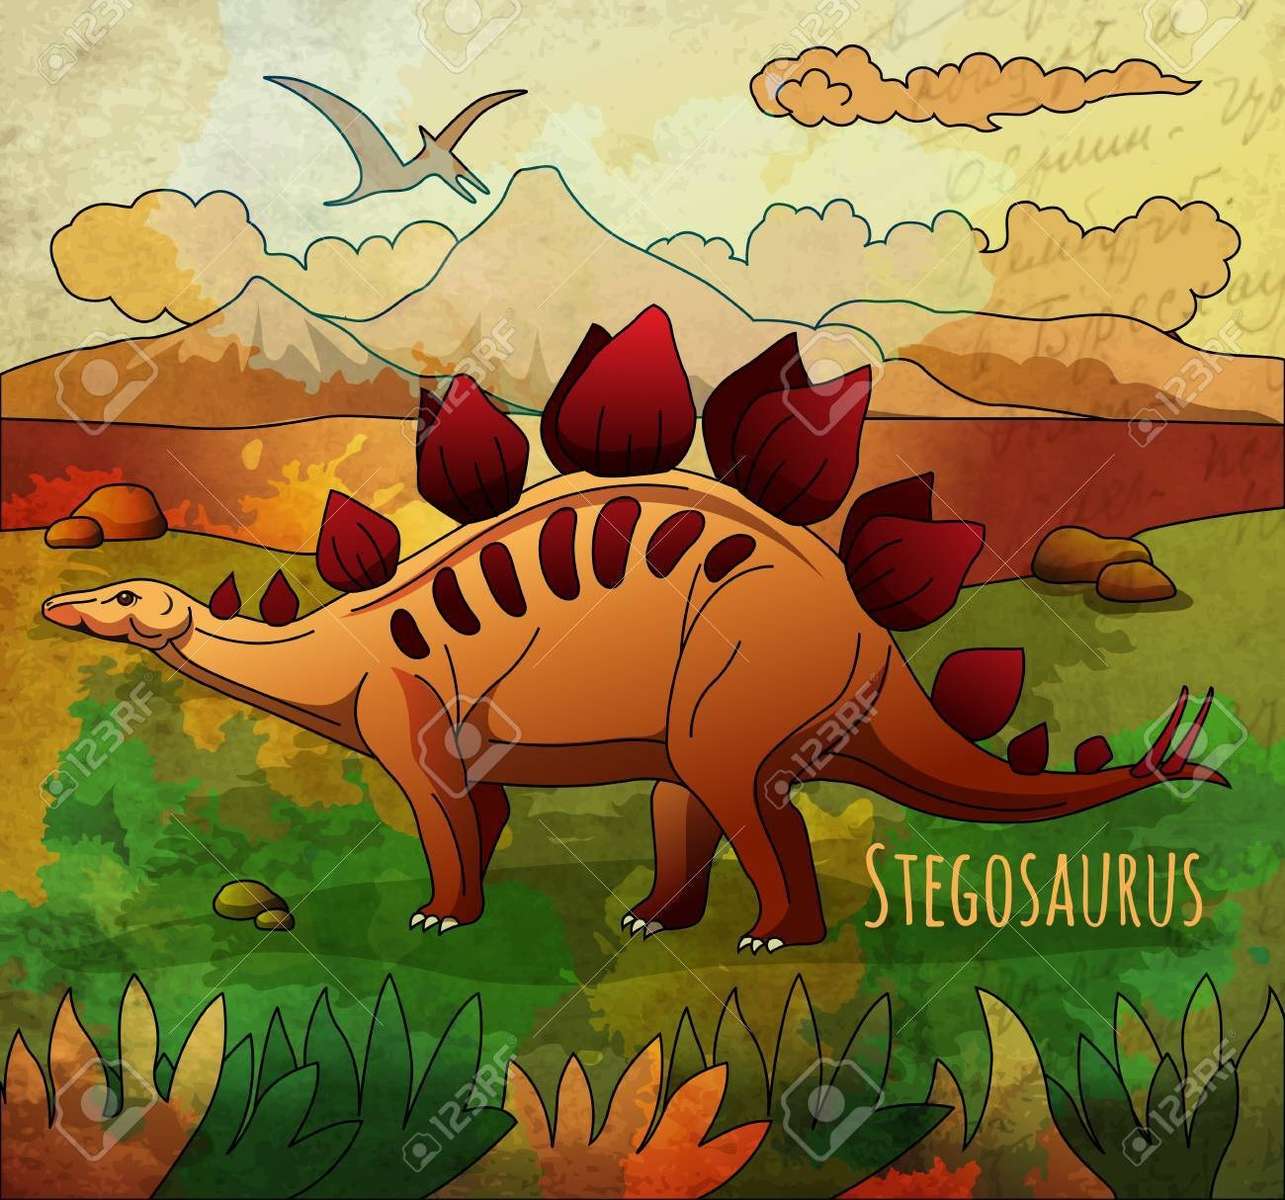 estegossauro puzzle online a partir de fotografia